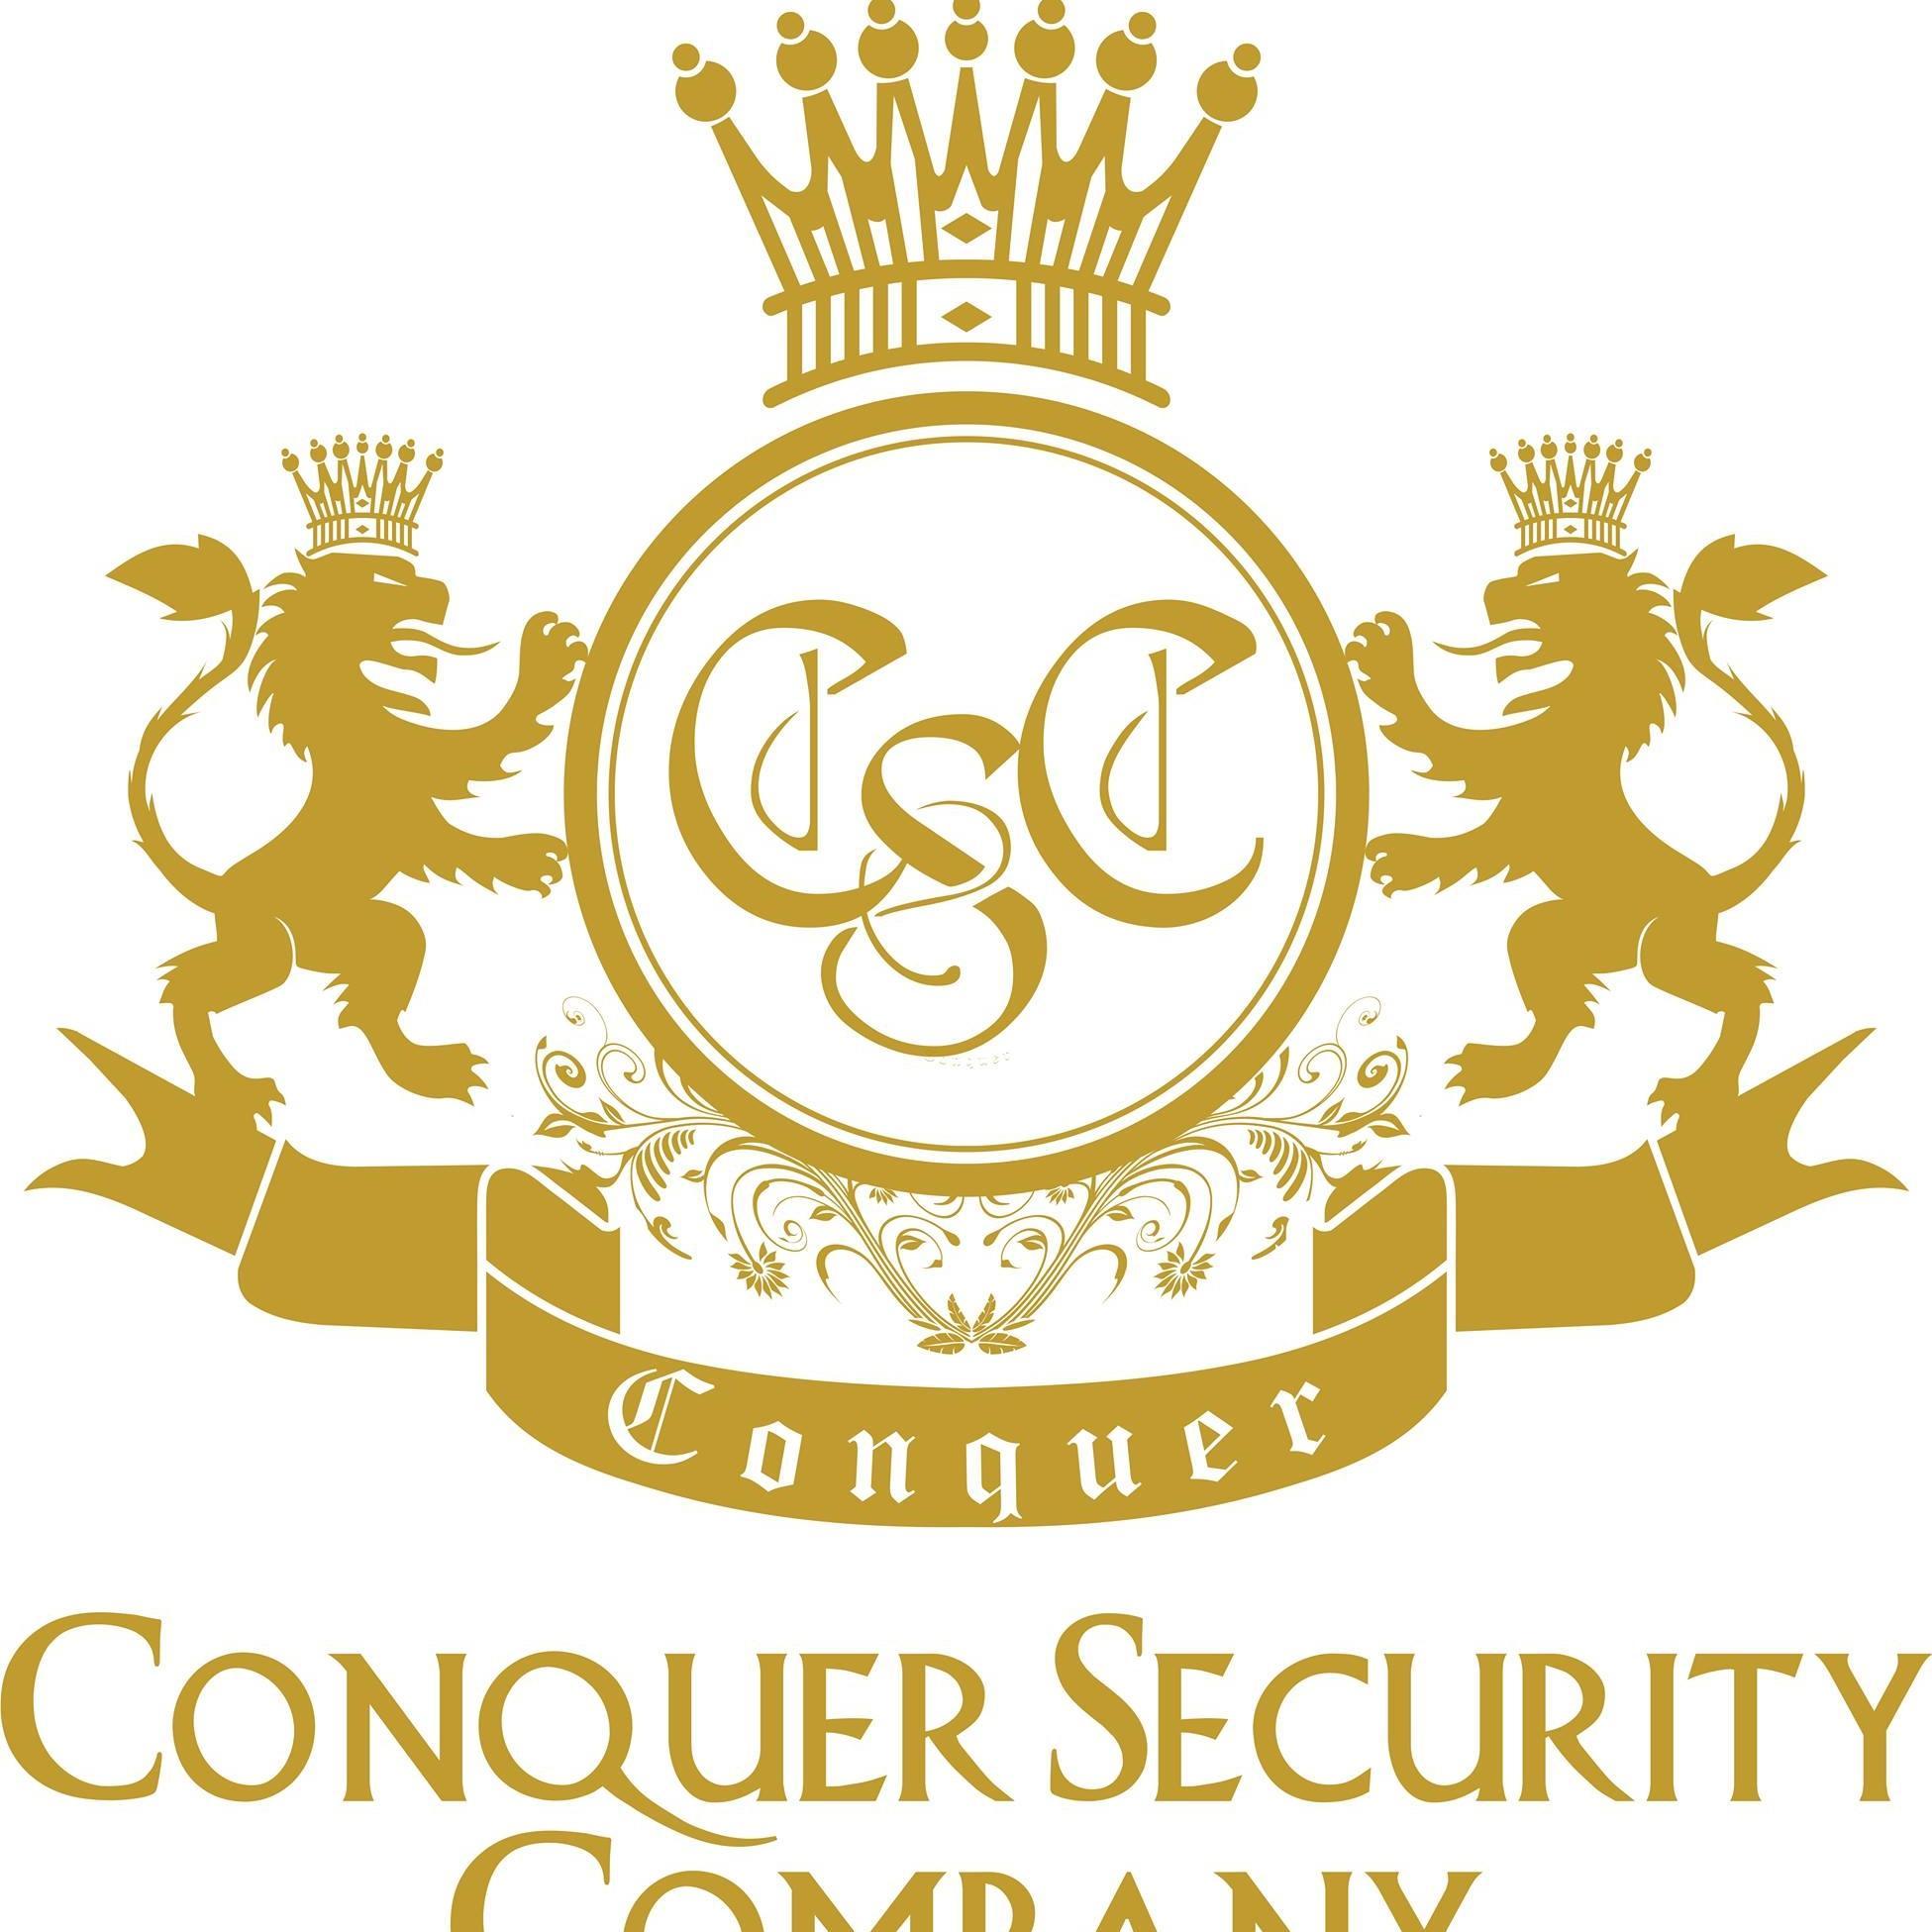  Conquer Security  Company